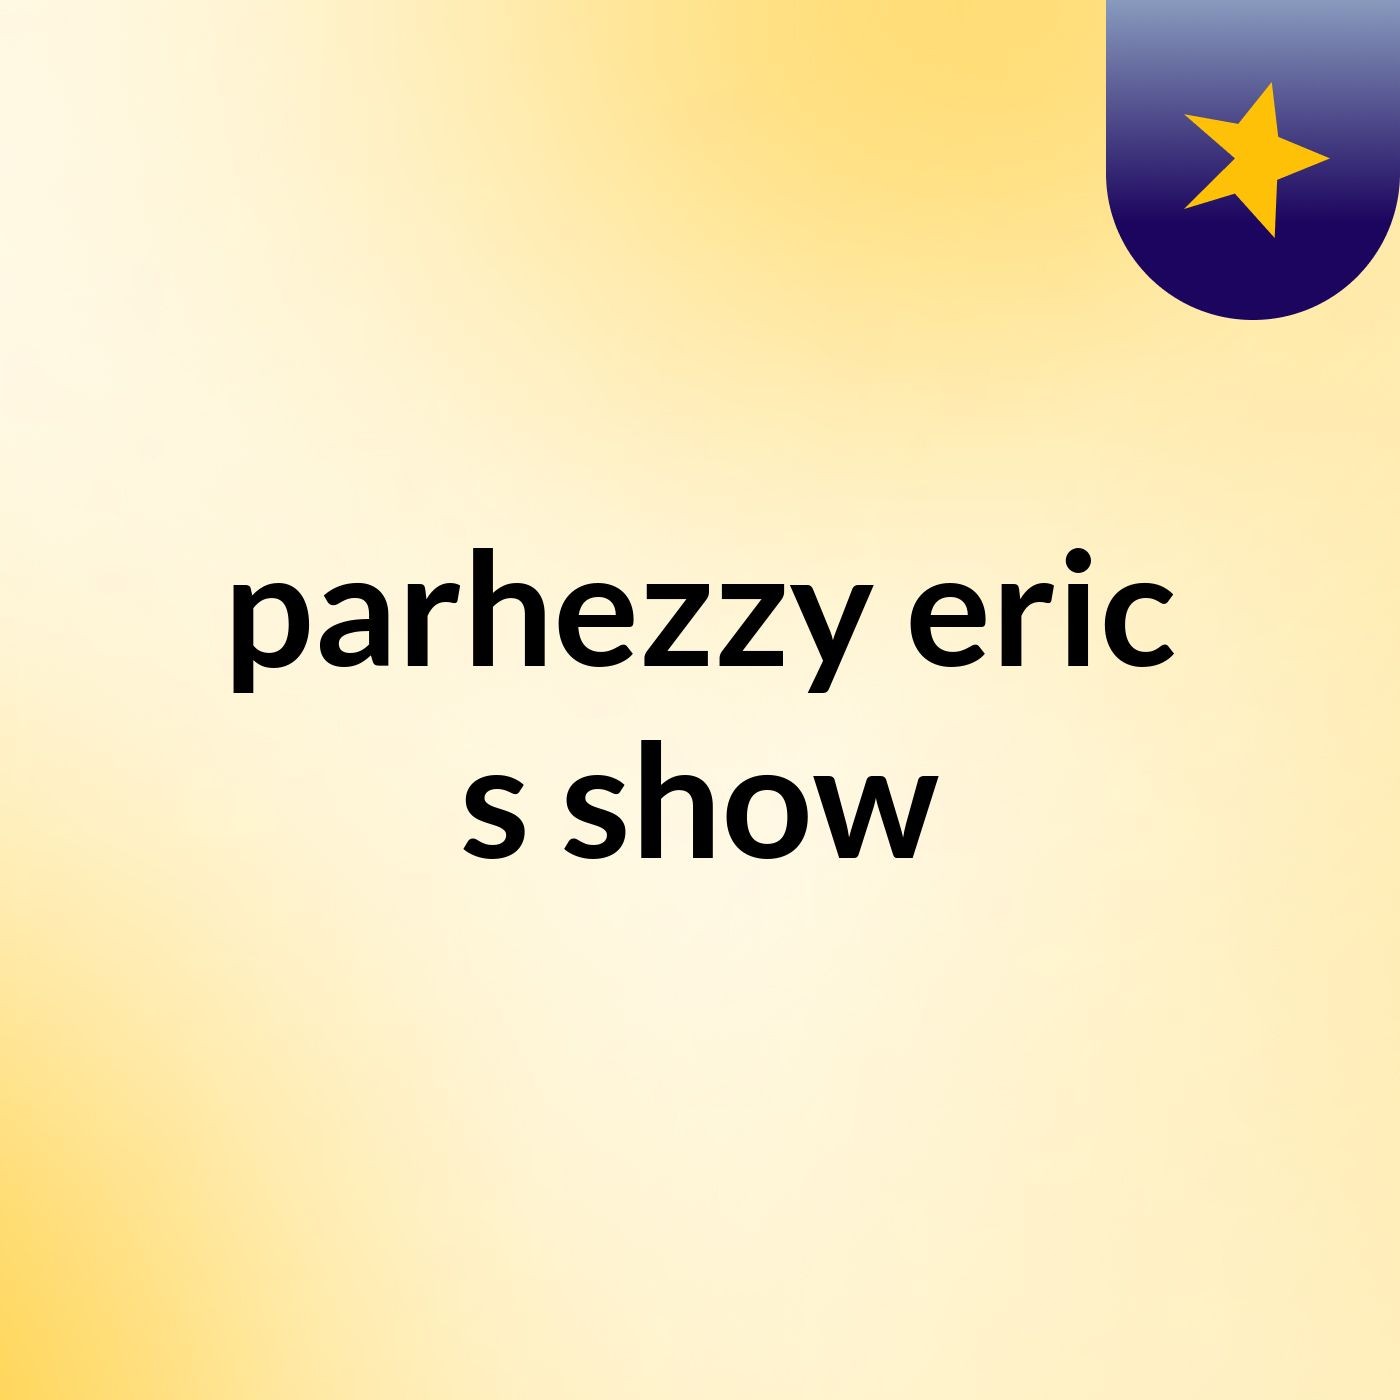 parhezzy eric's show